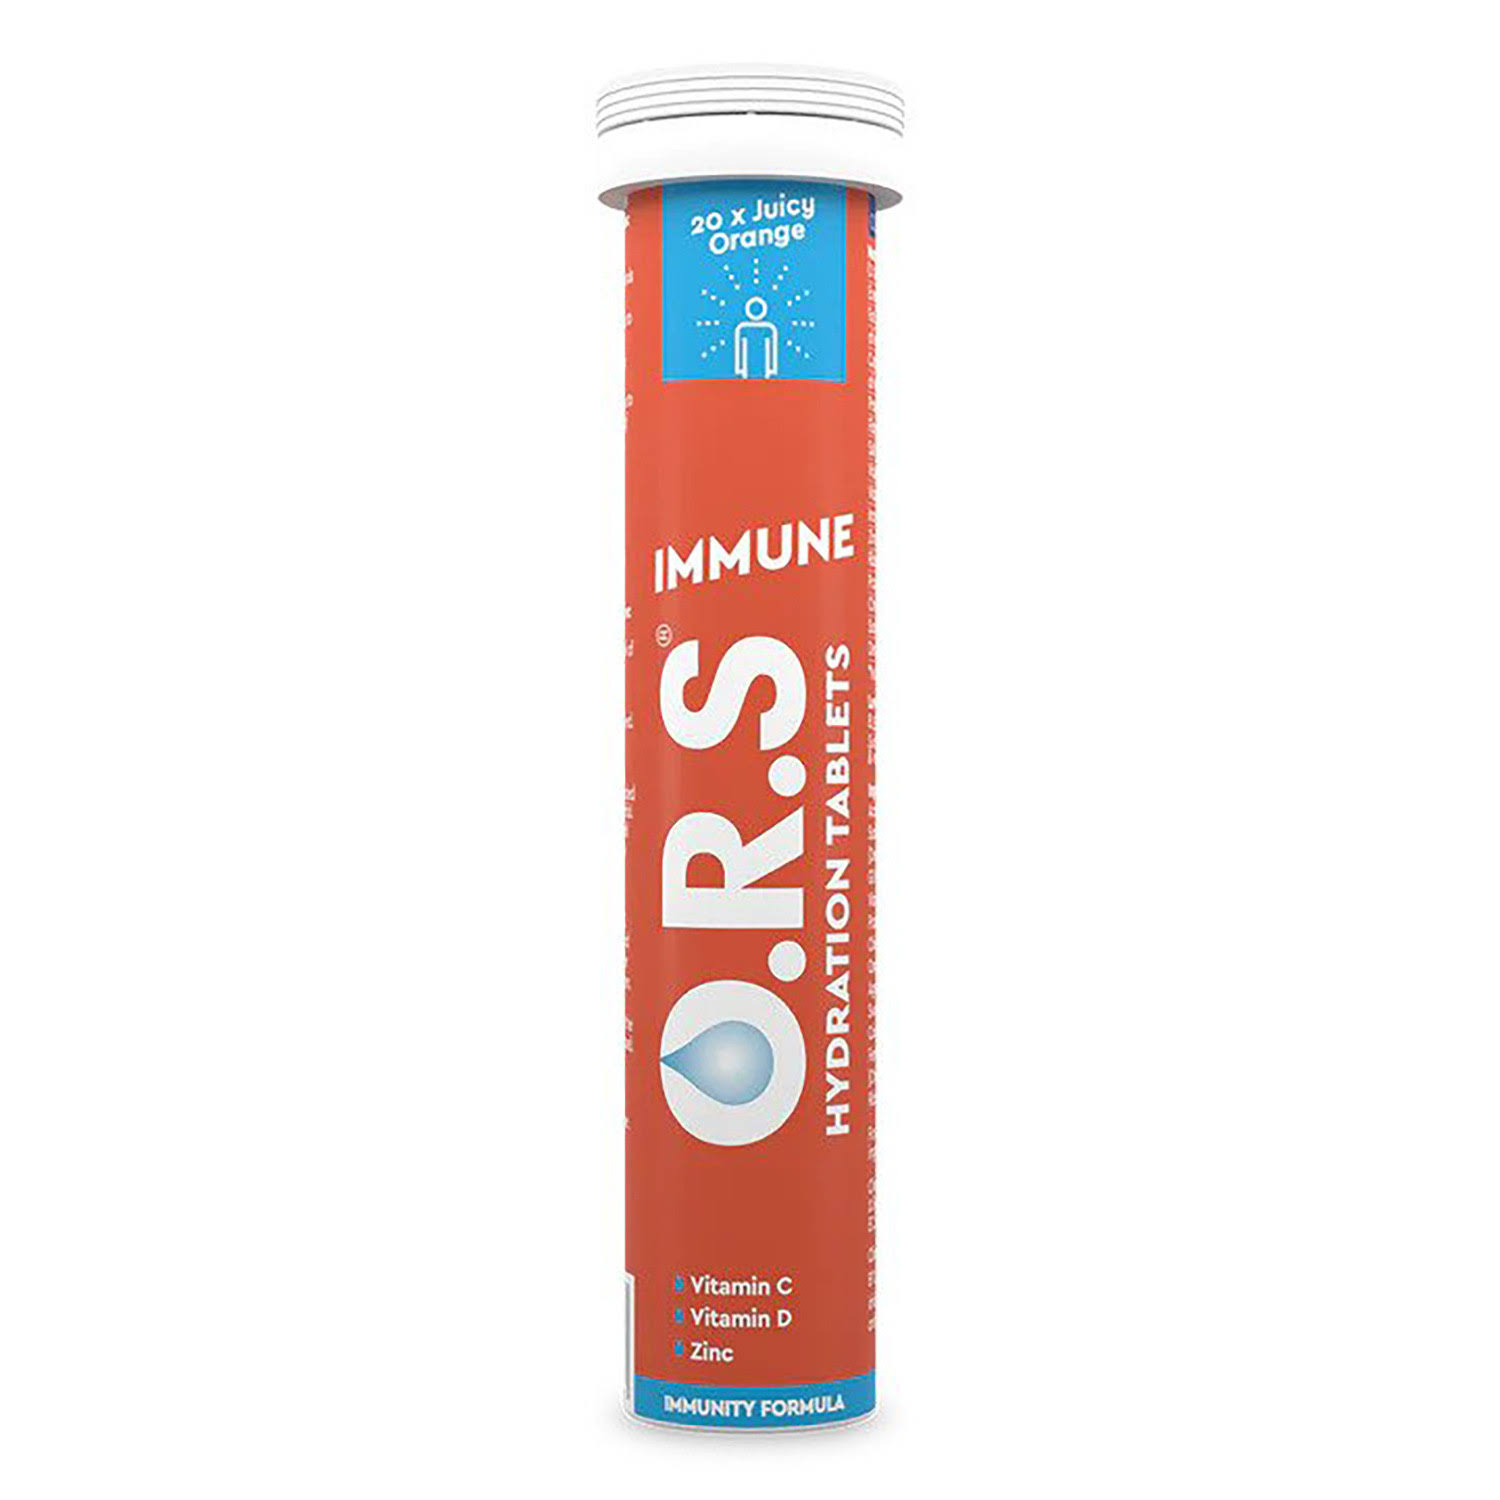 O.R.S Oral Hydration Immune Juicy Orange 20 Tablets